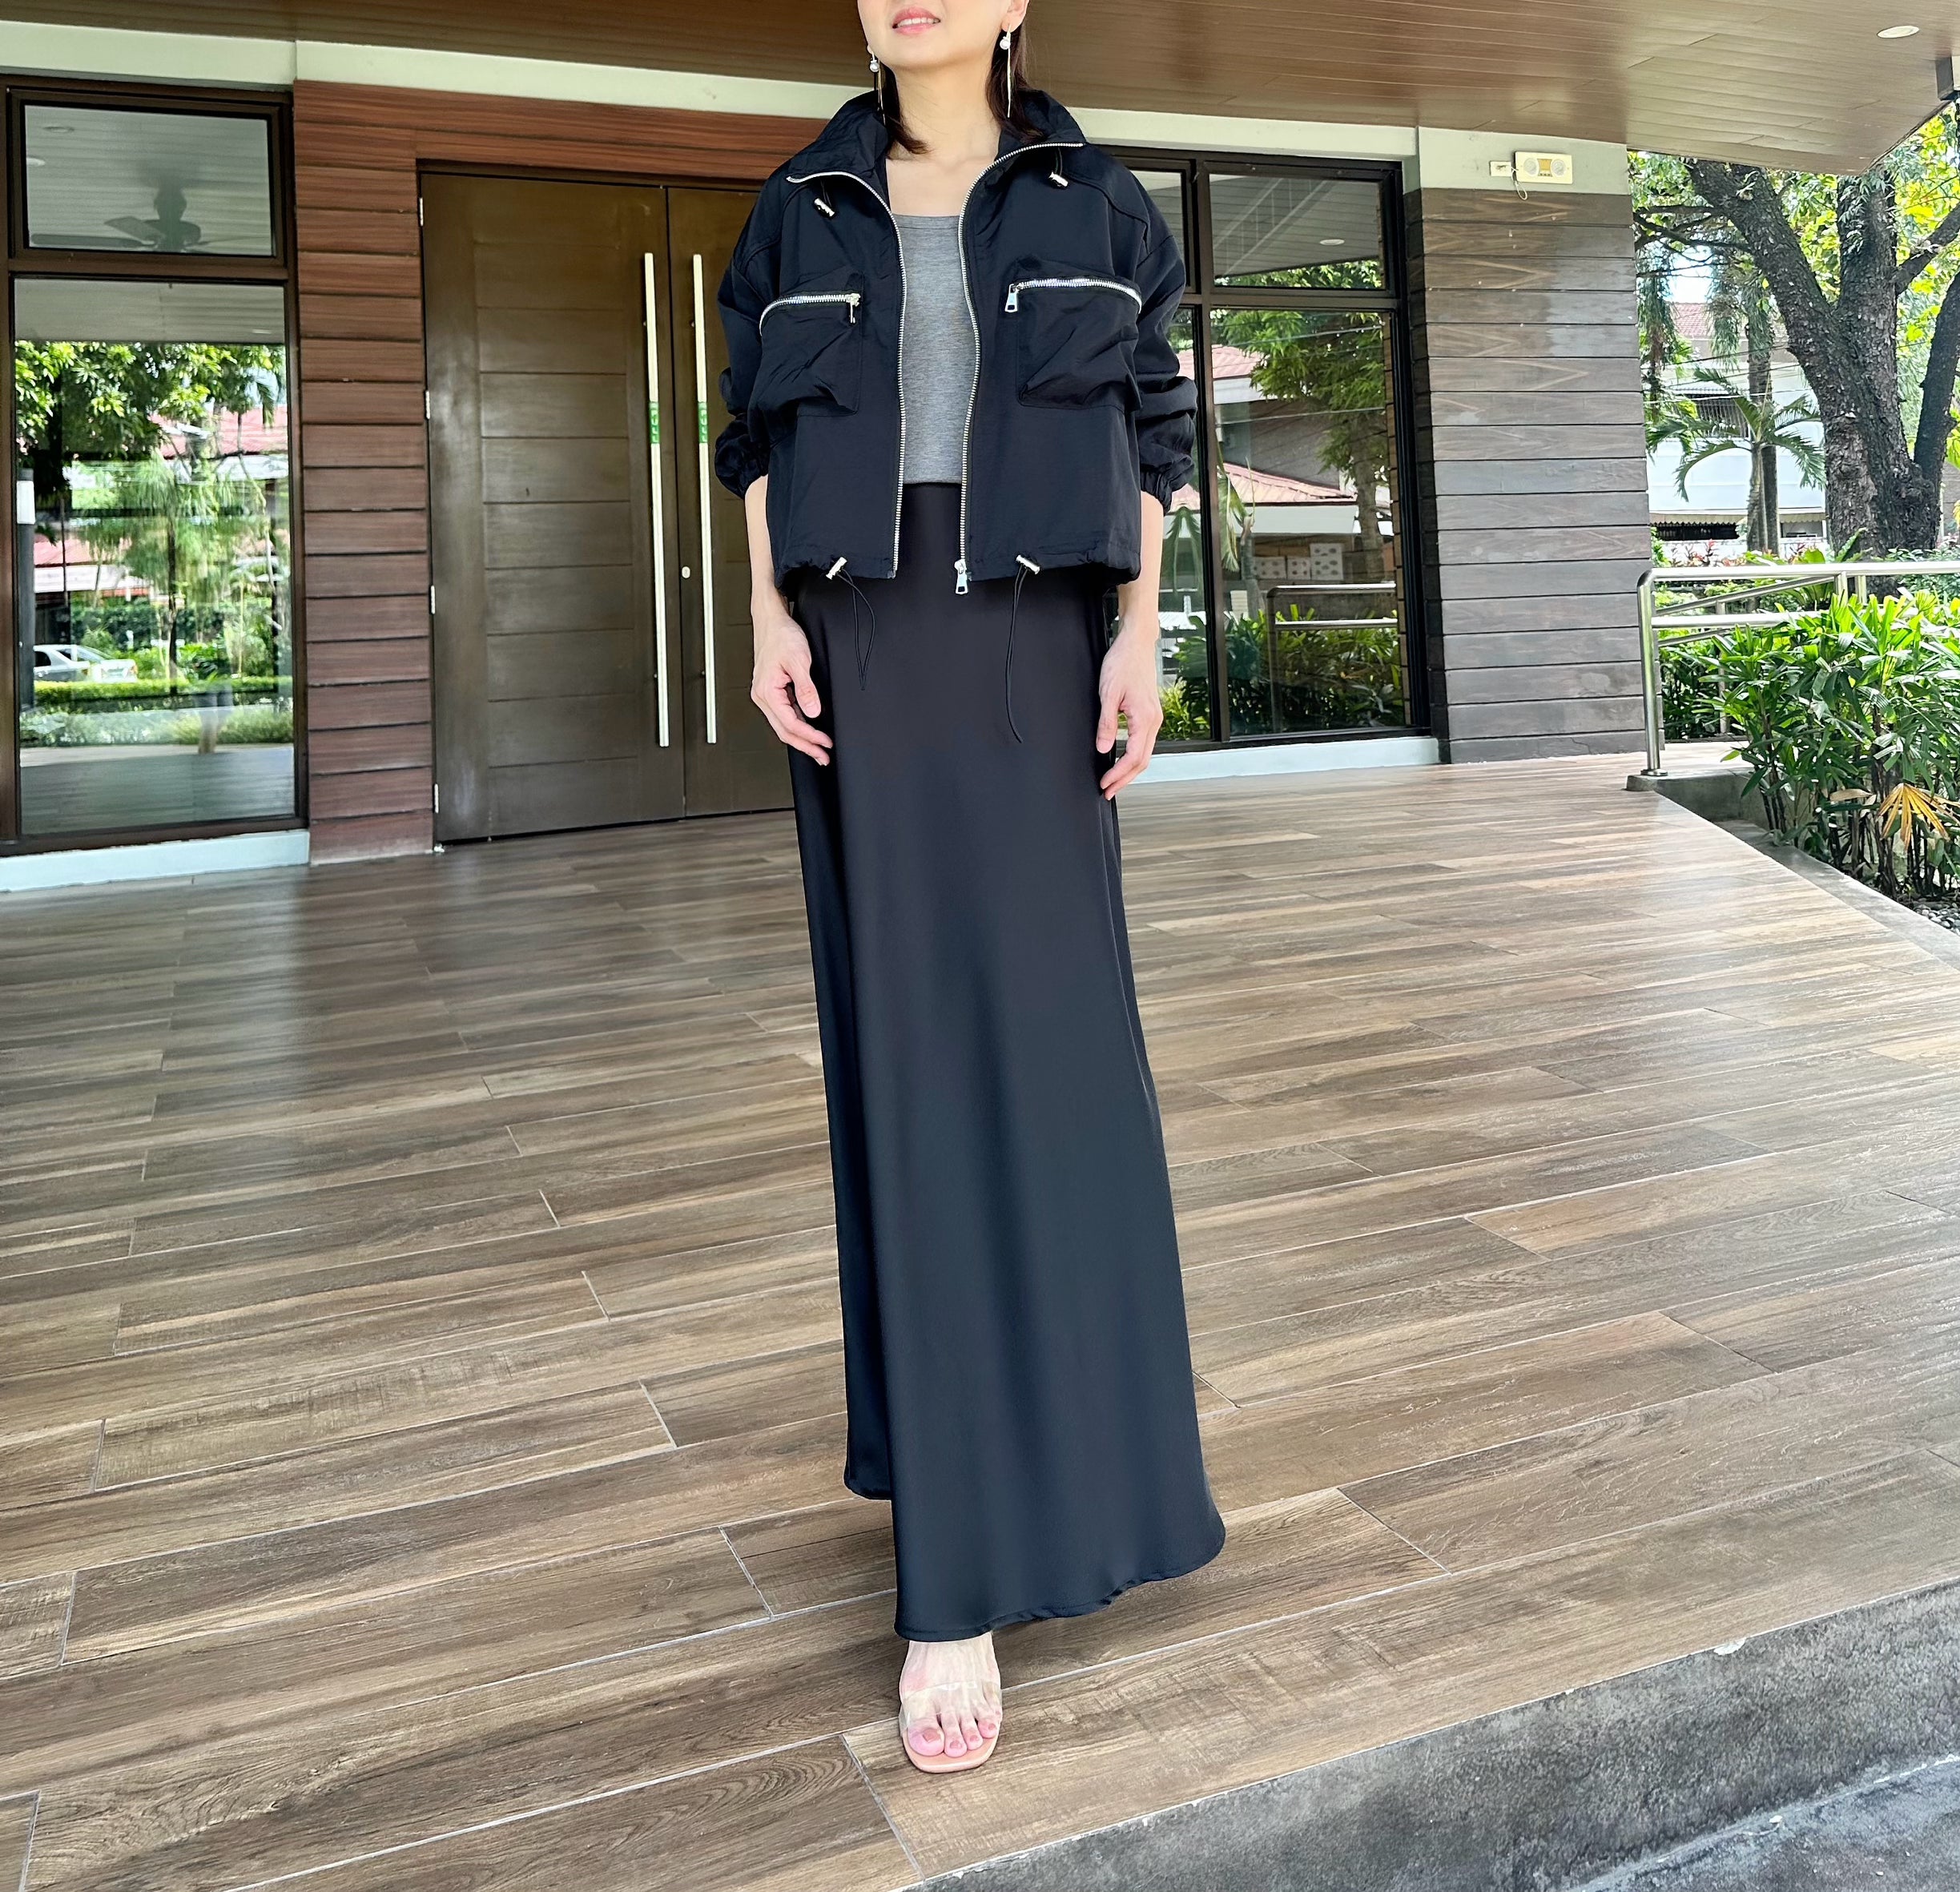 Isabella Satin Skirt in Black